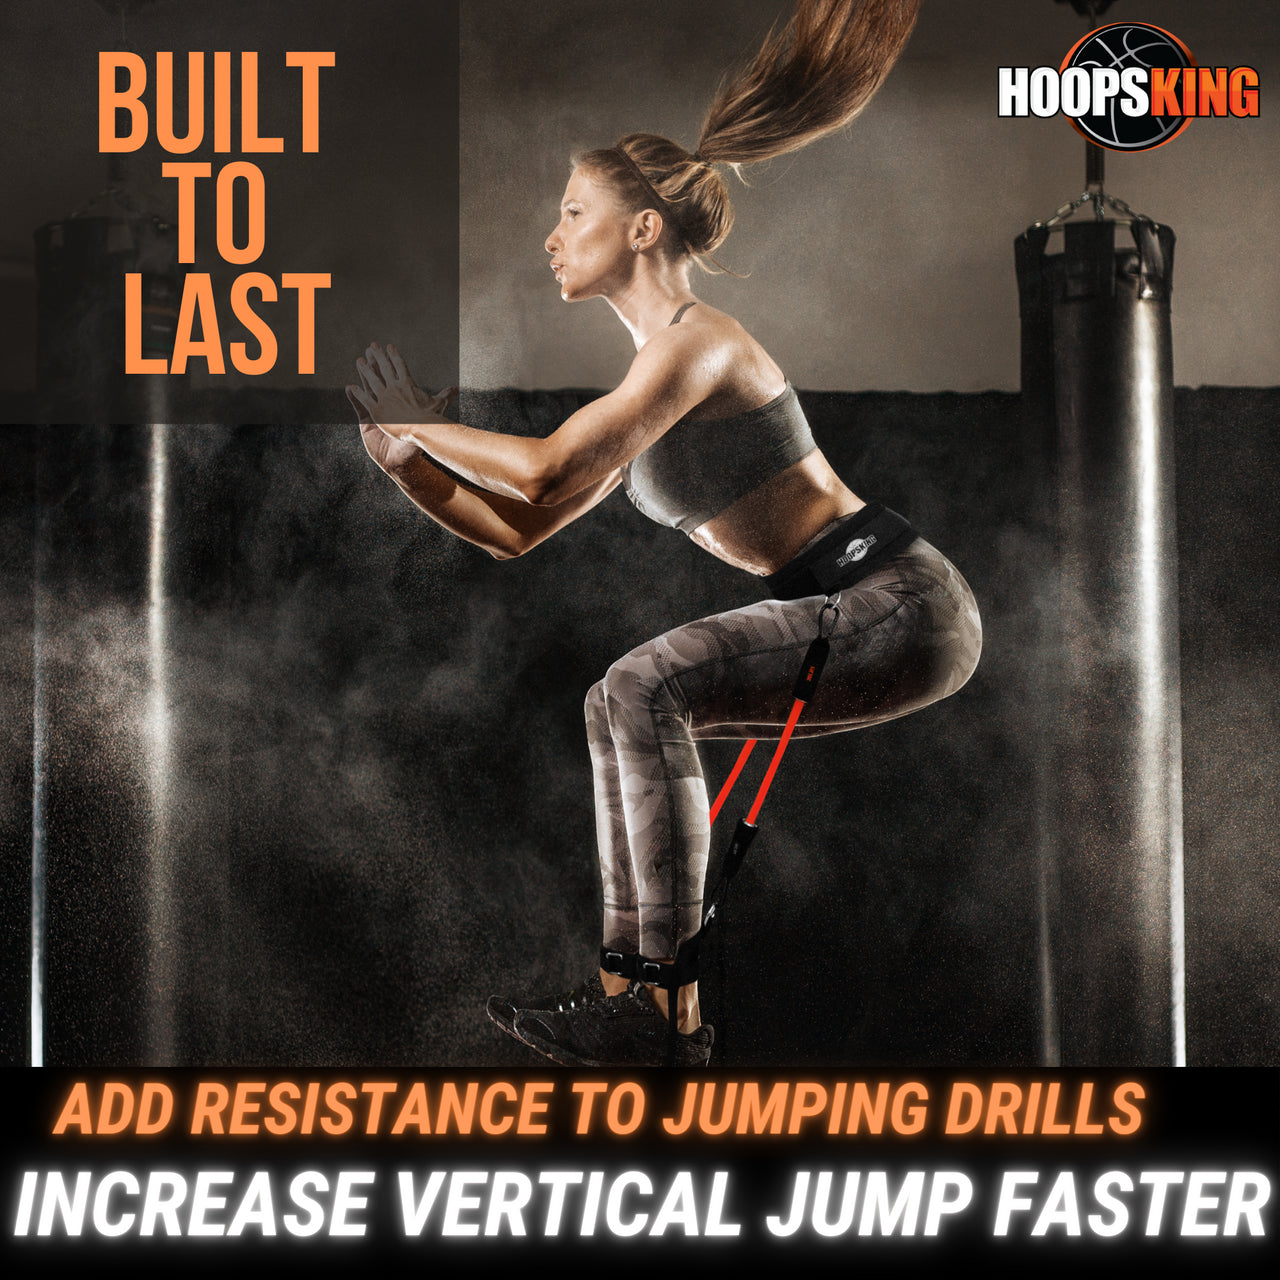 vertical jump plyo box drills resistance bands